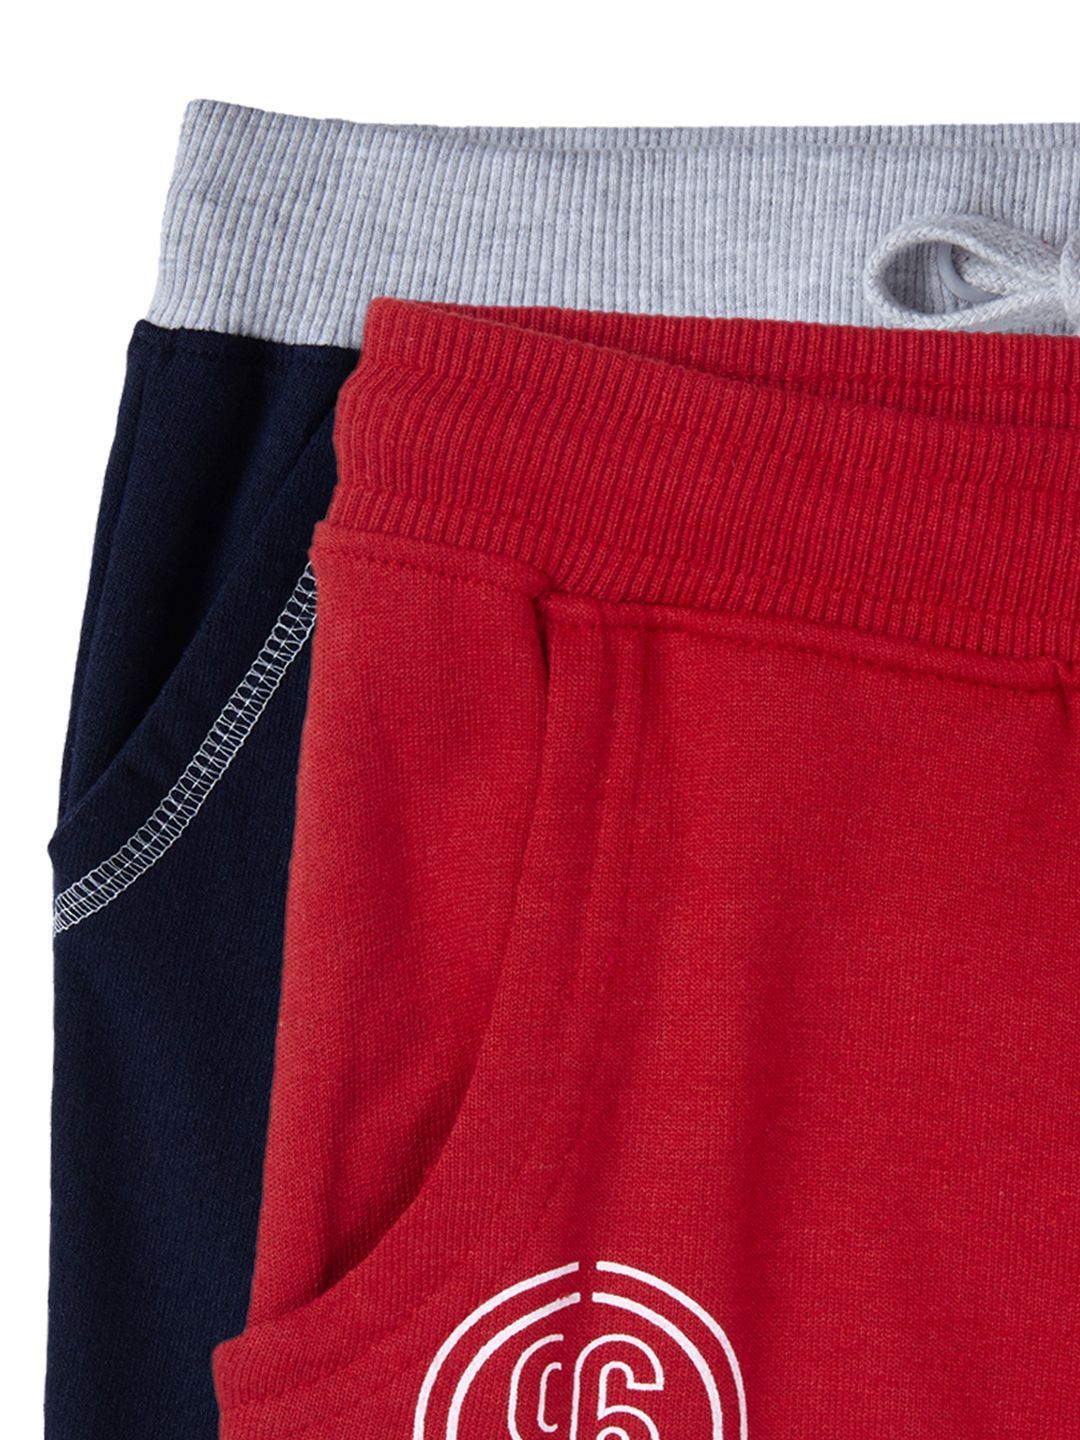 Amazon.com: George Boys' School Uniform - Flat Front Pants (Regular, Slim &  Husky) (8 S, Navy Blue): Clothing, Shoes & Jewelry